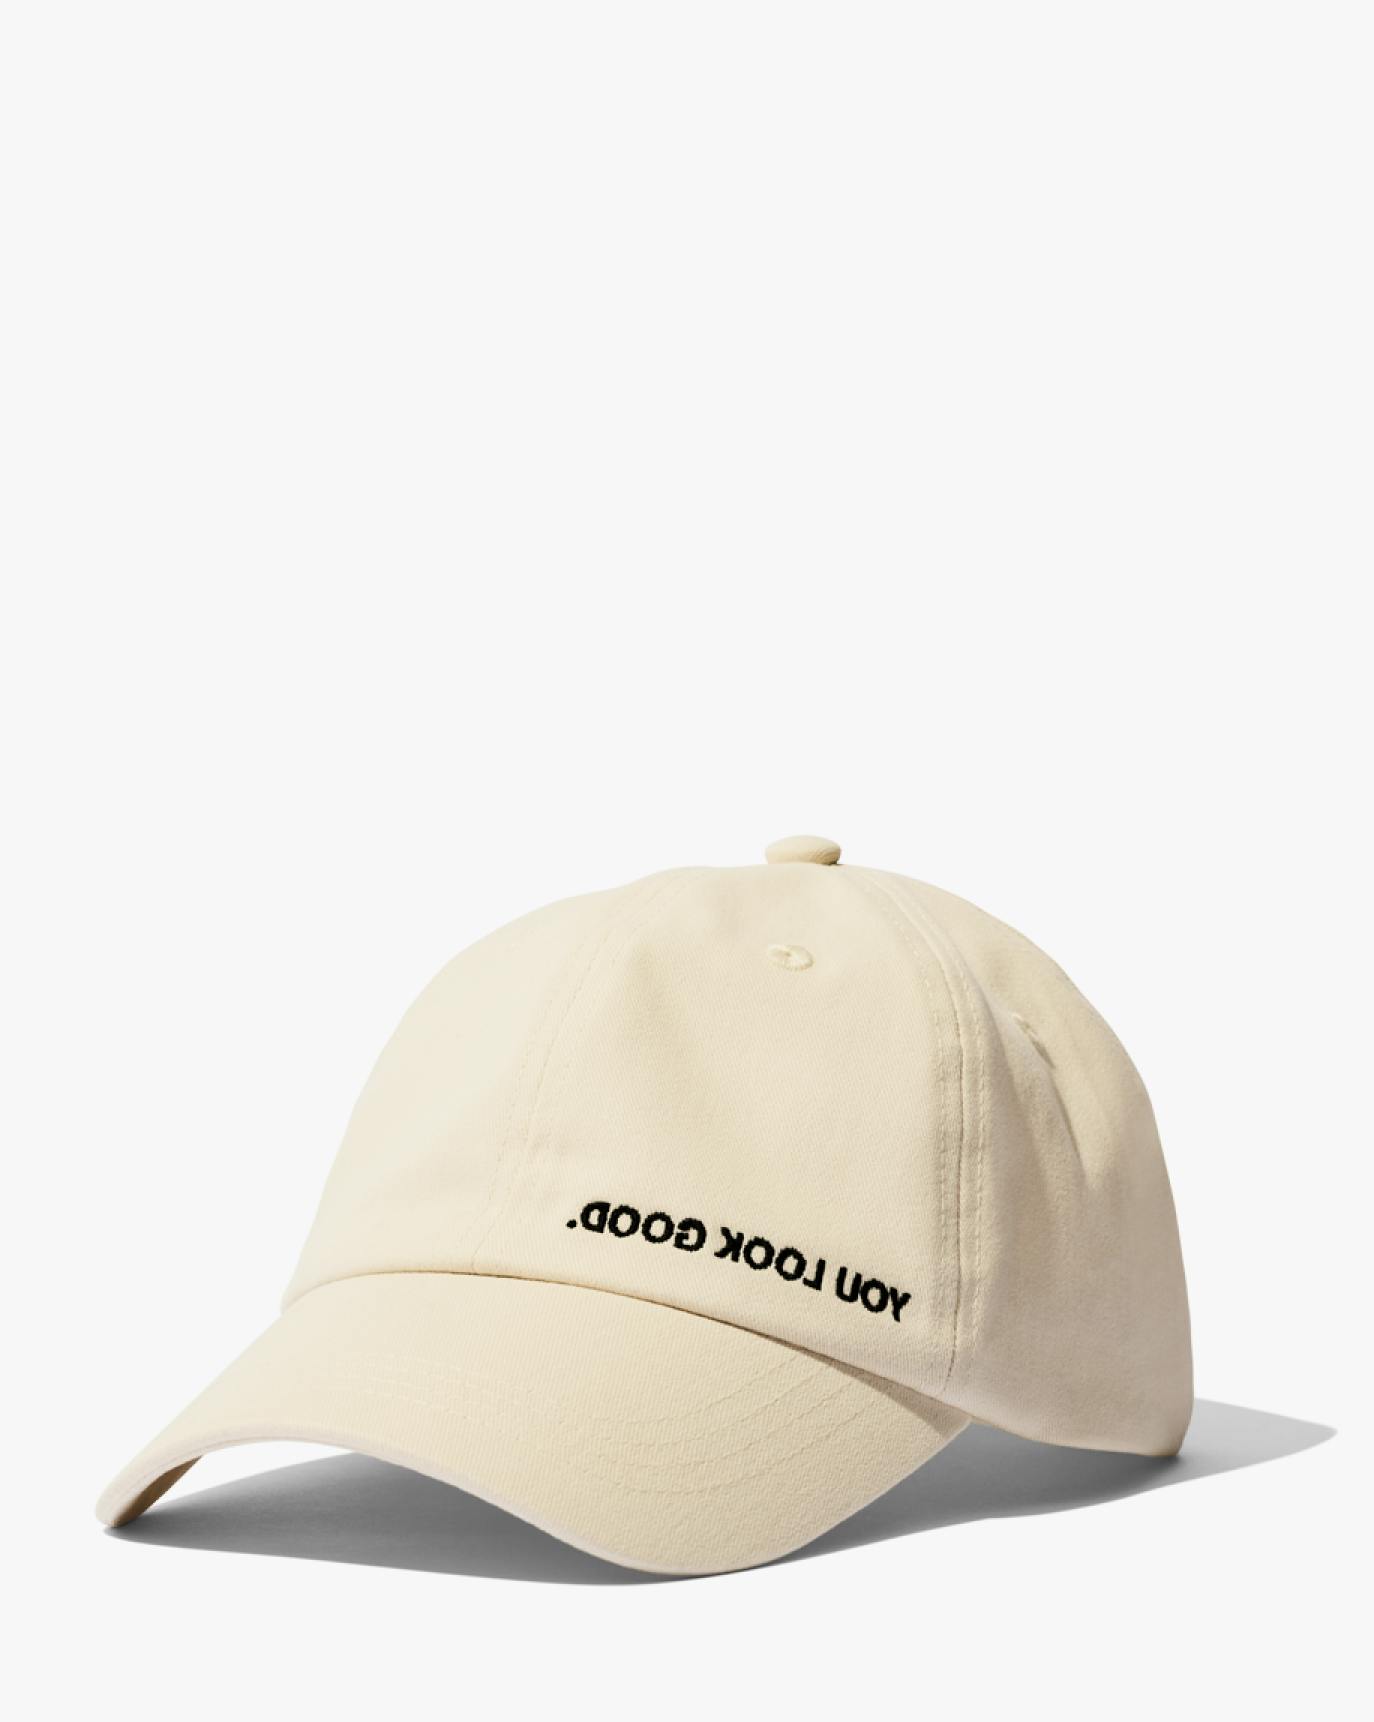 glossier you look good cap